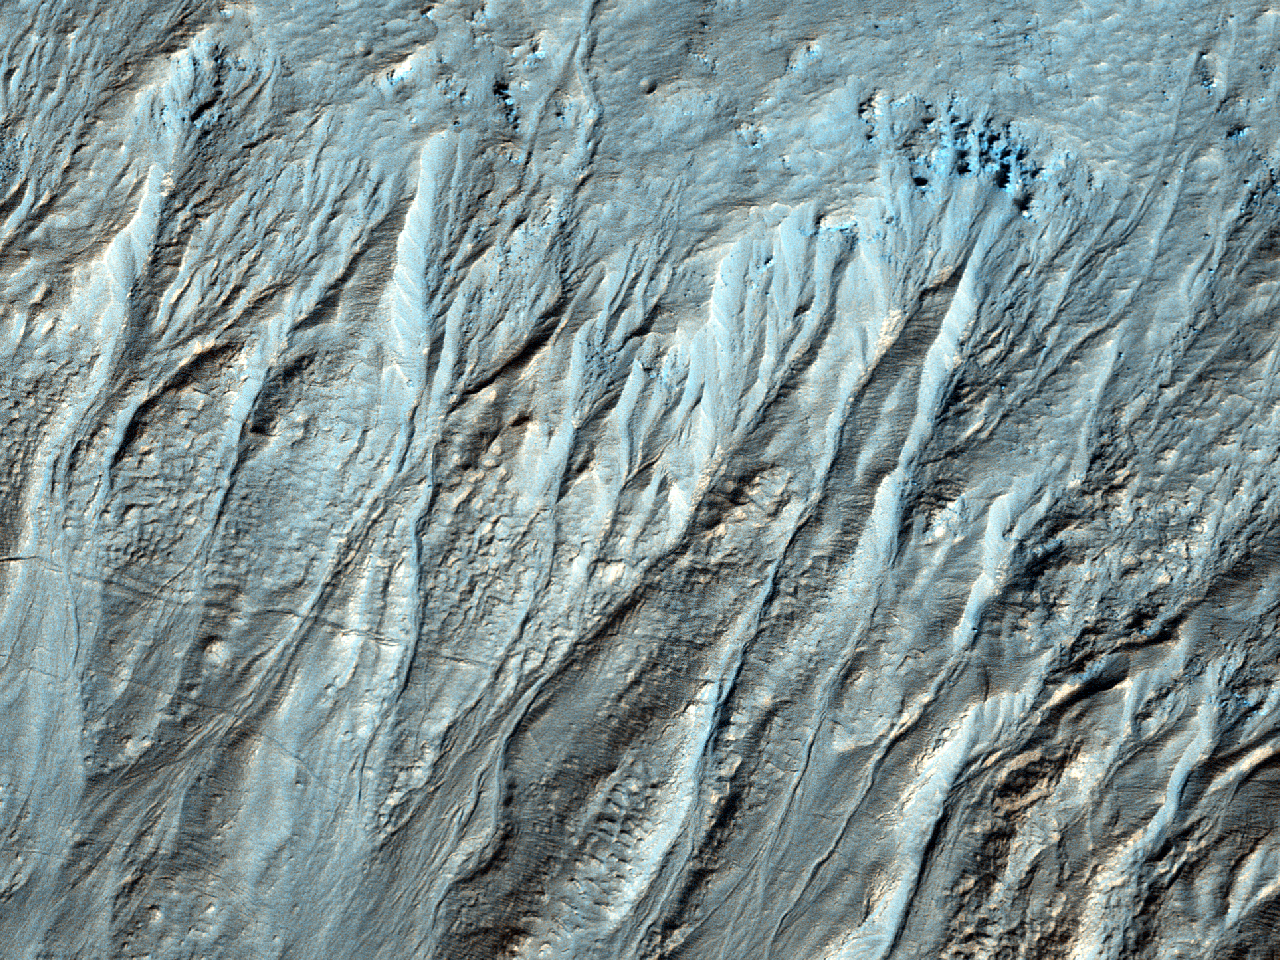 Calanchi in un cratere a medie latitudini meridionali